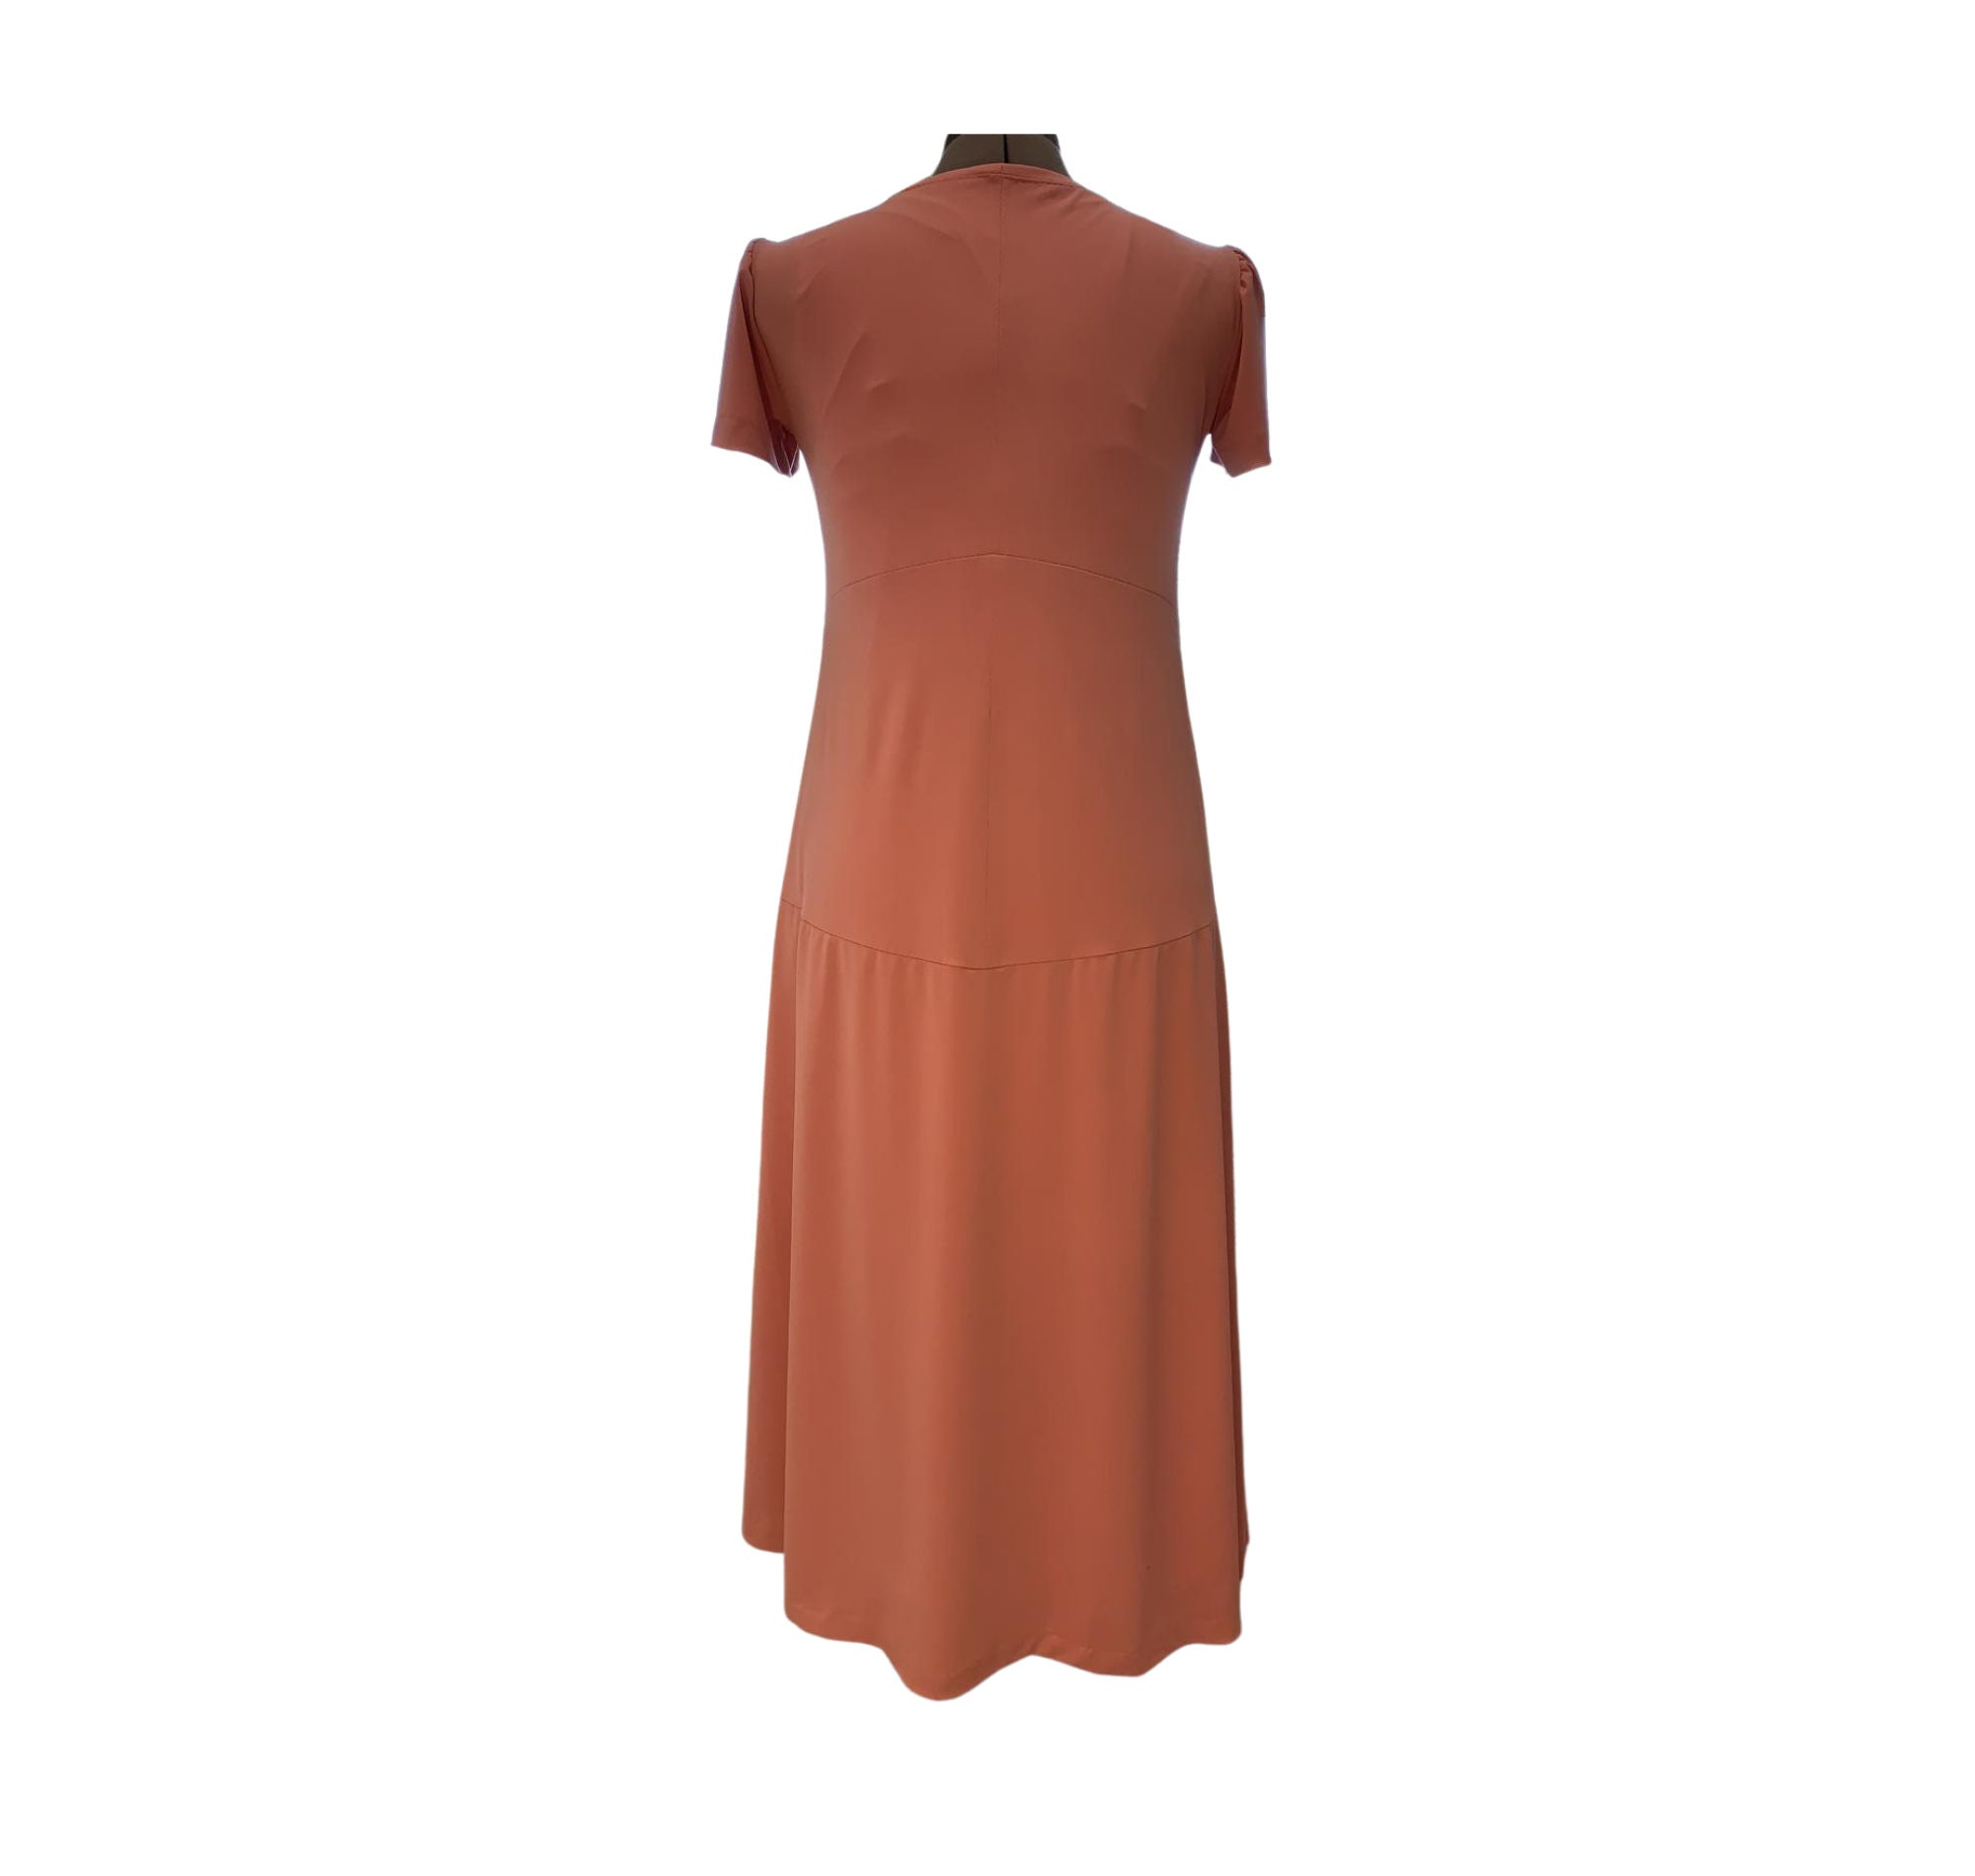 Women's Flared Skirt Dress Pattern With Midriff Designed - Etsy